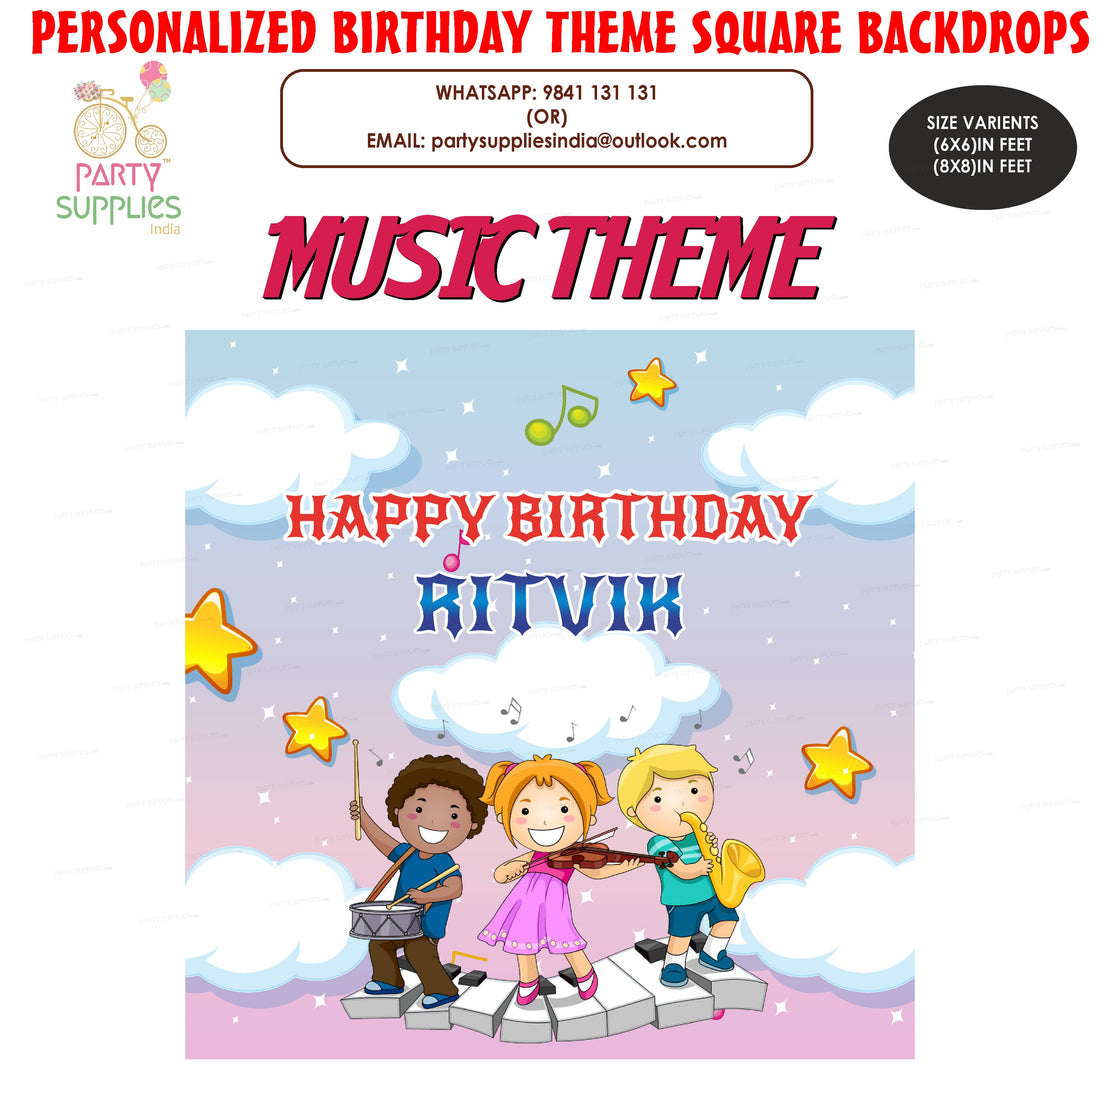 PSI Music Theme Customized Square Backdrop